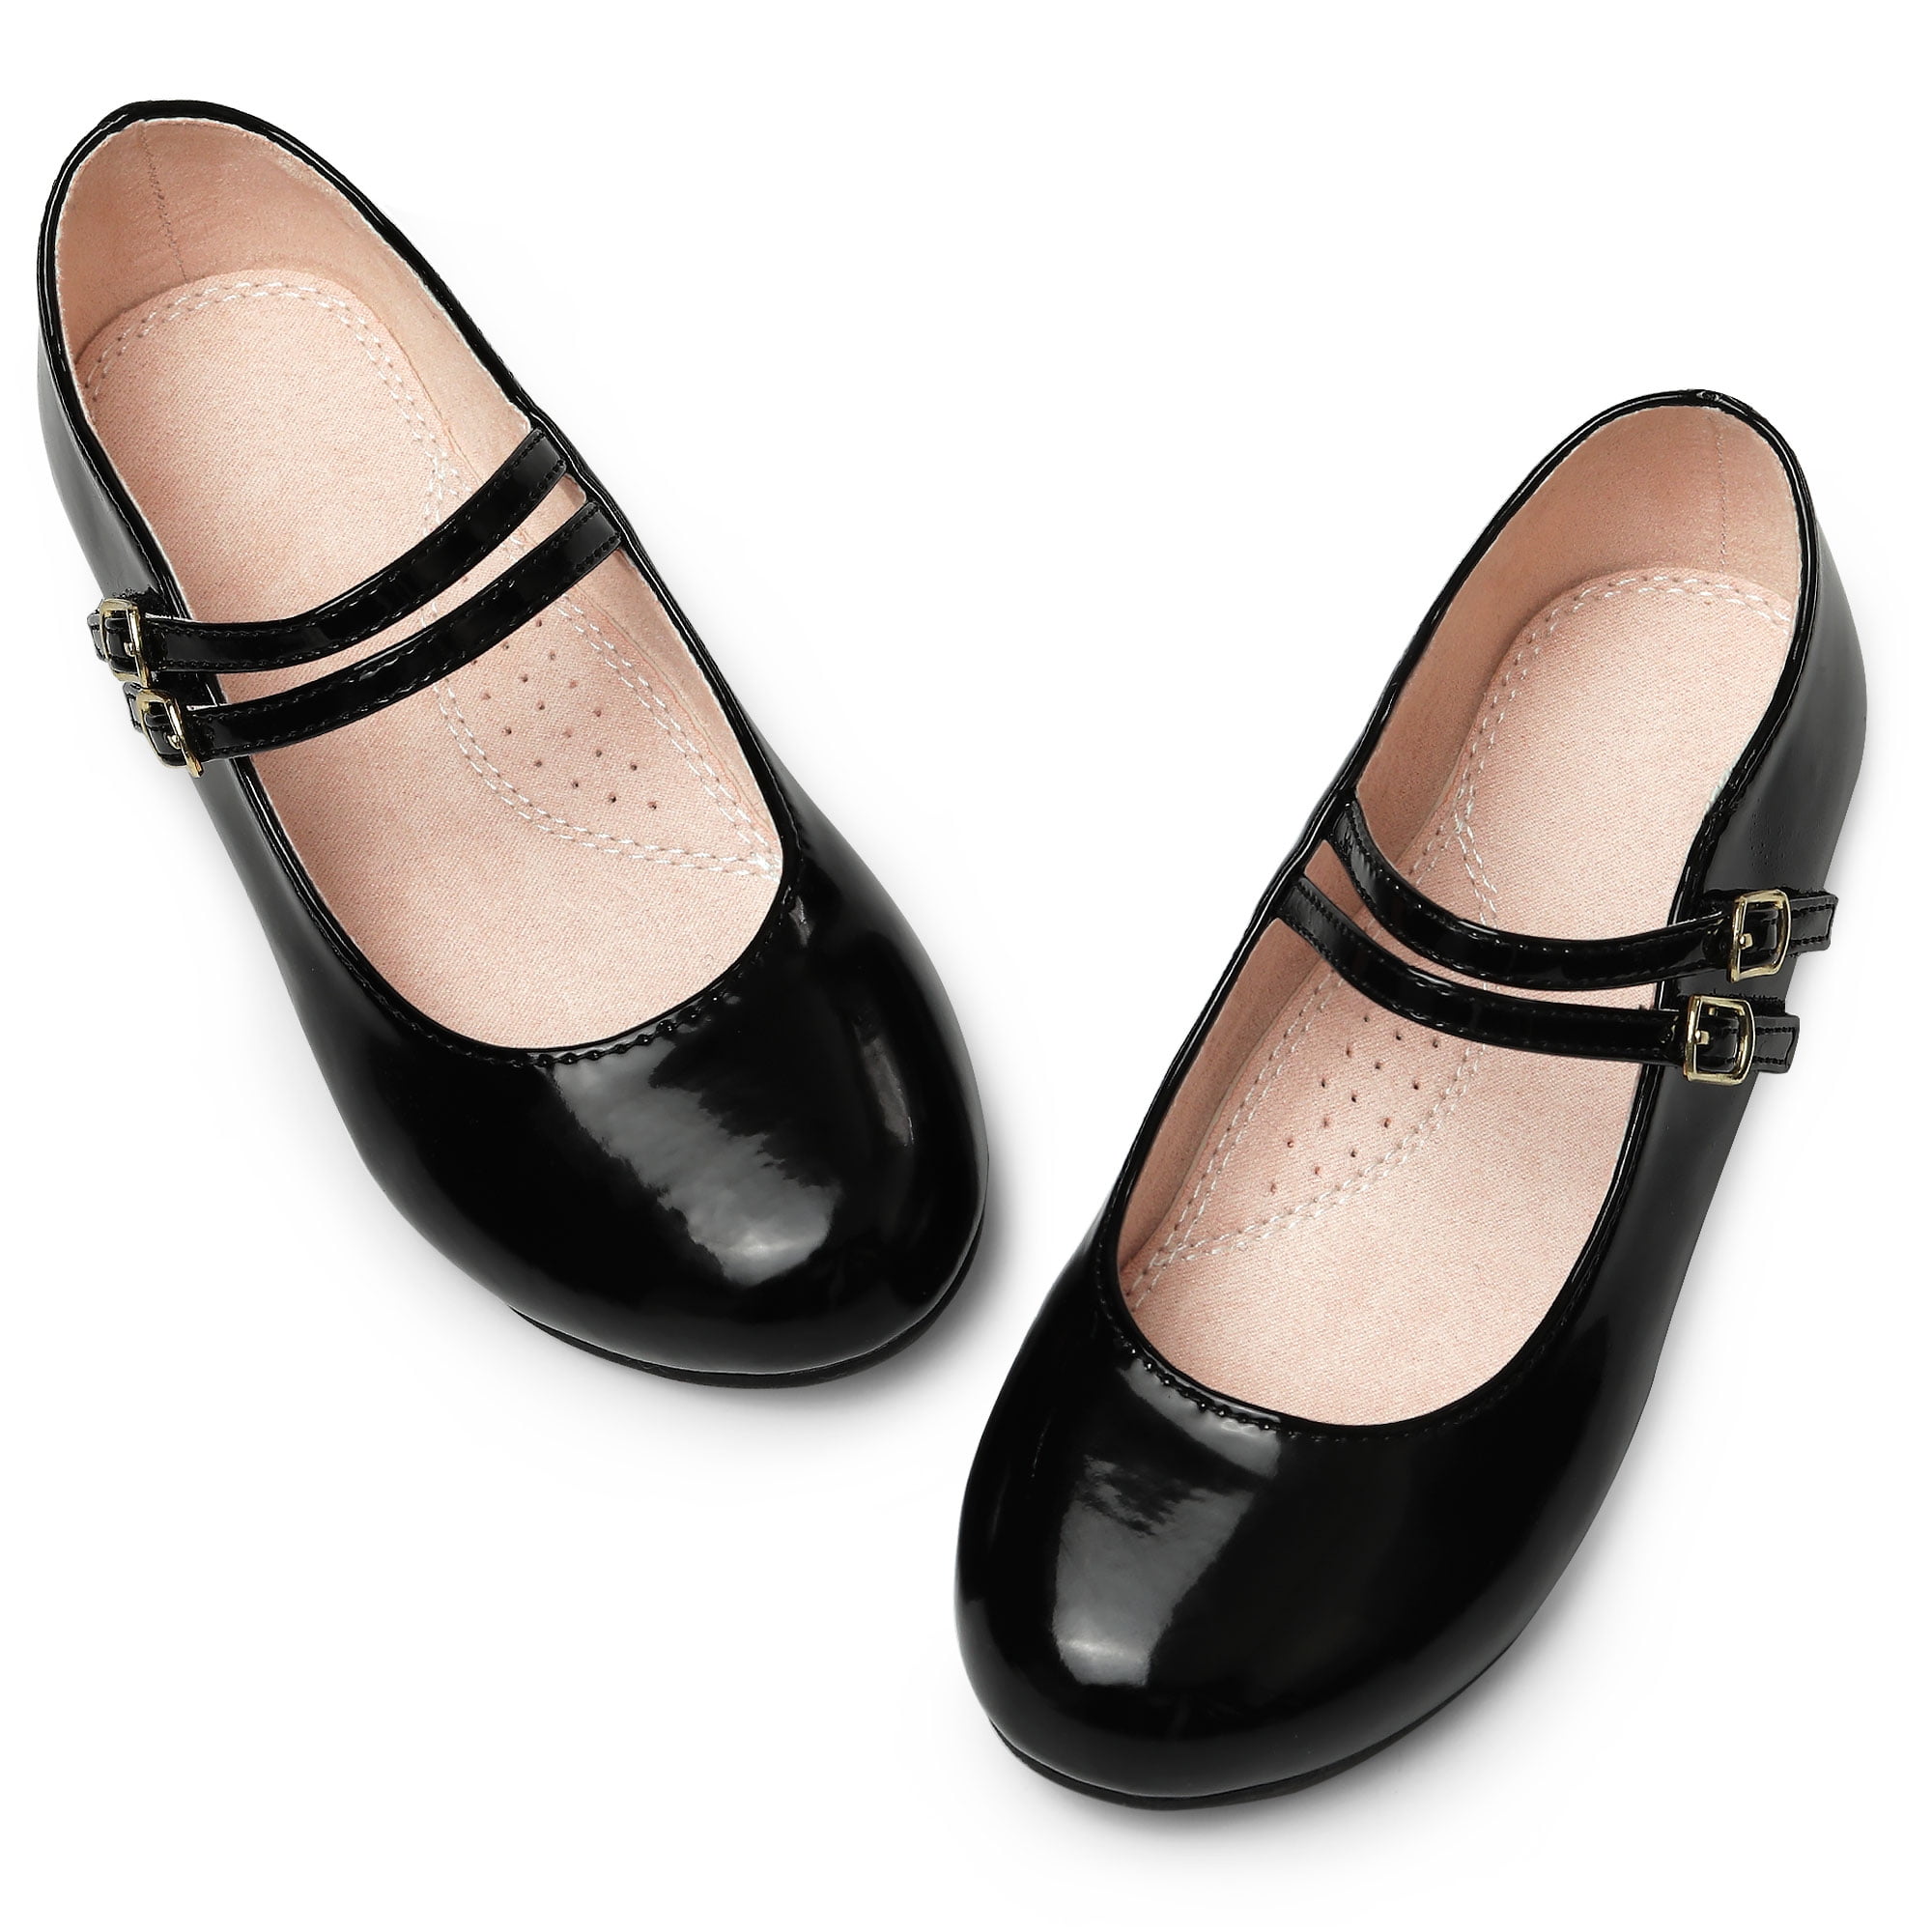 black dress shoes for girls